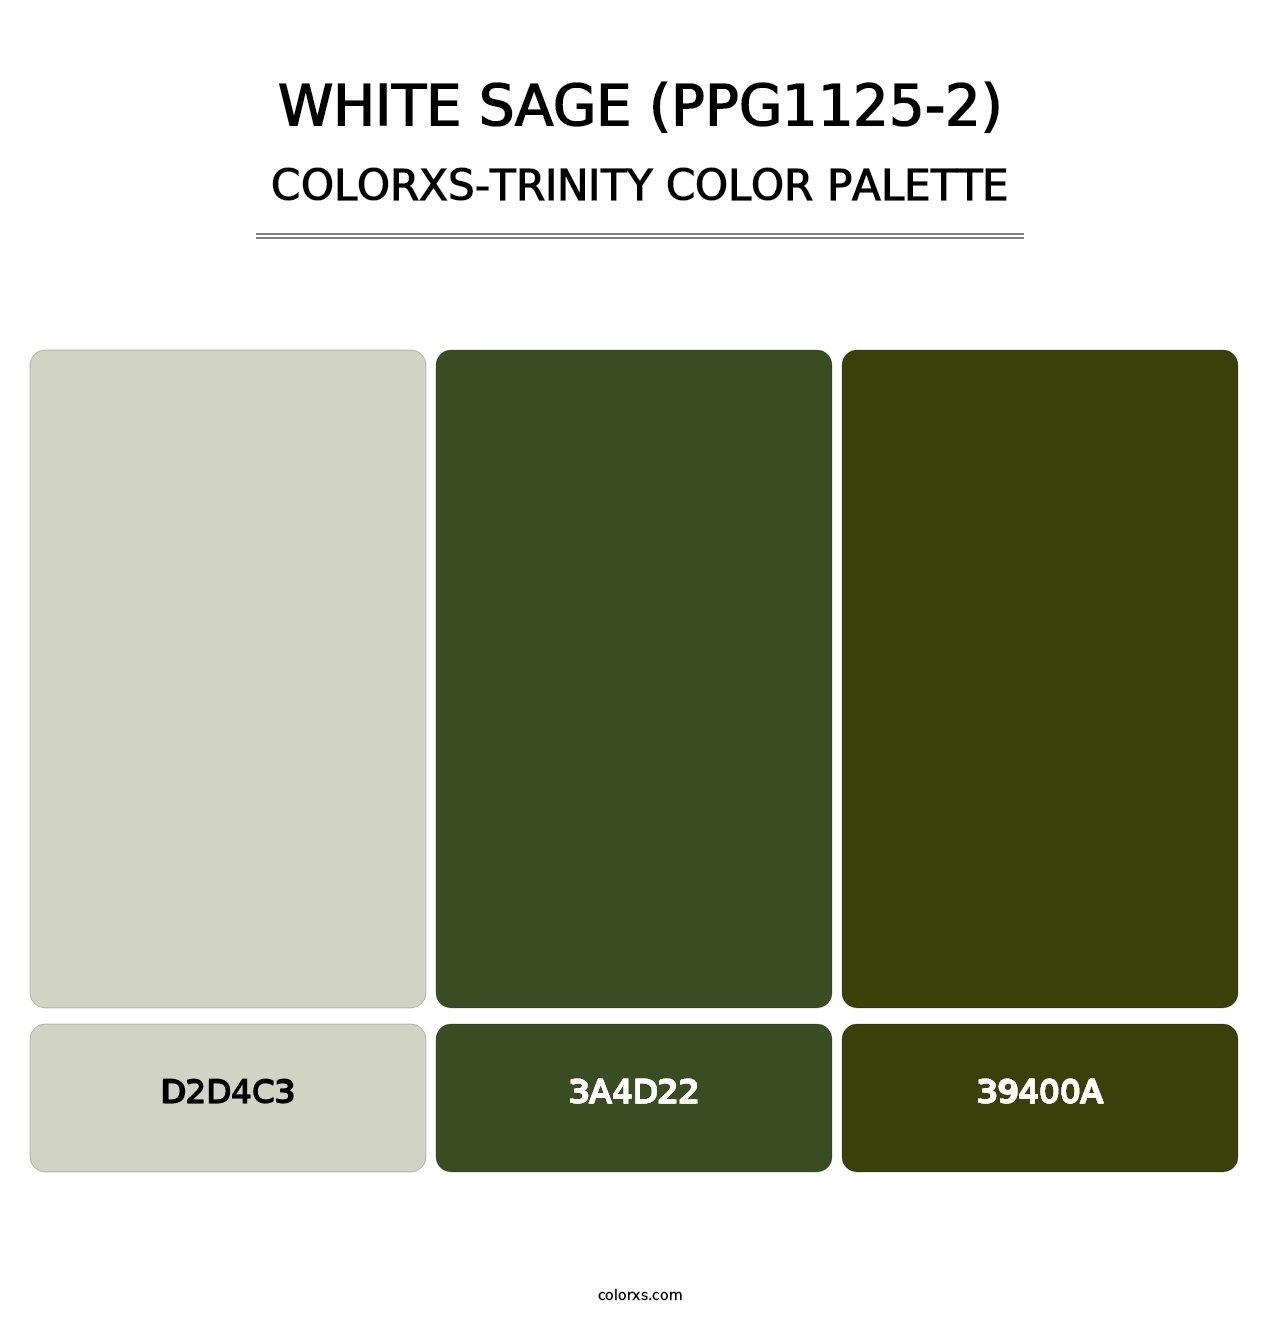 White Sage (PPG1125-2) - Colorxs Trinity Palette